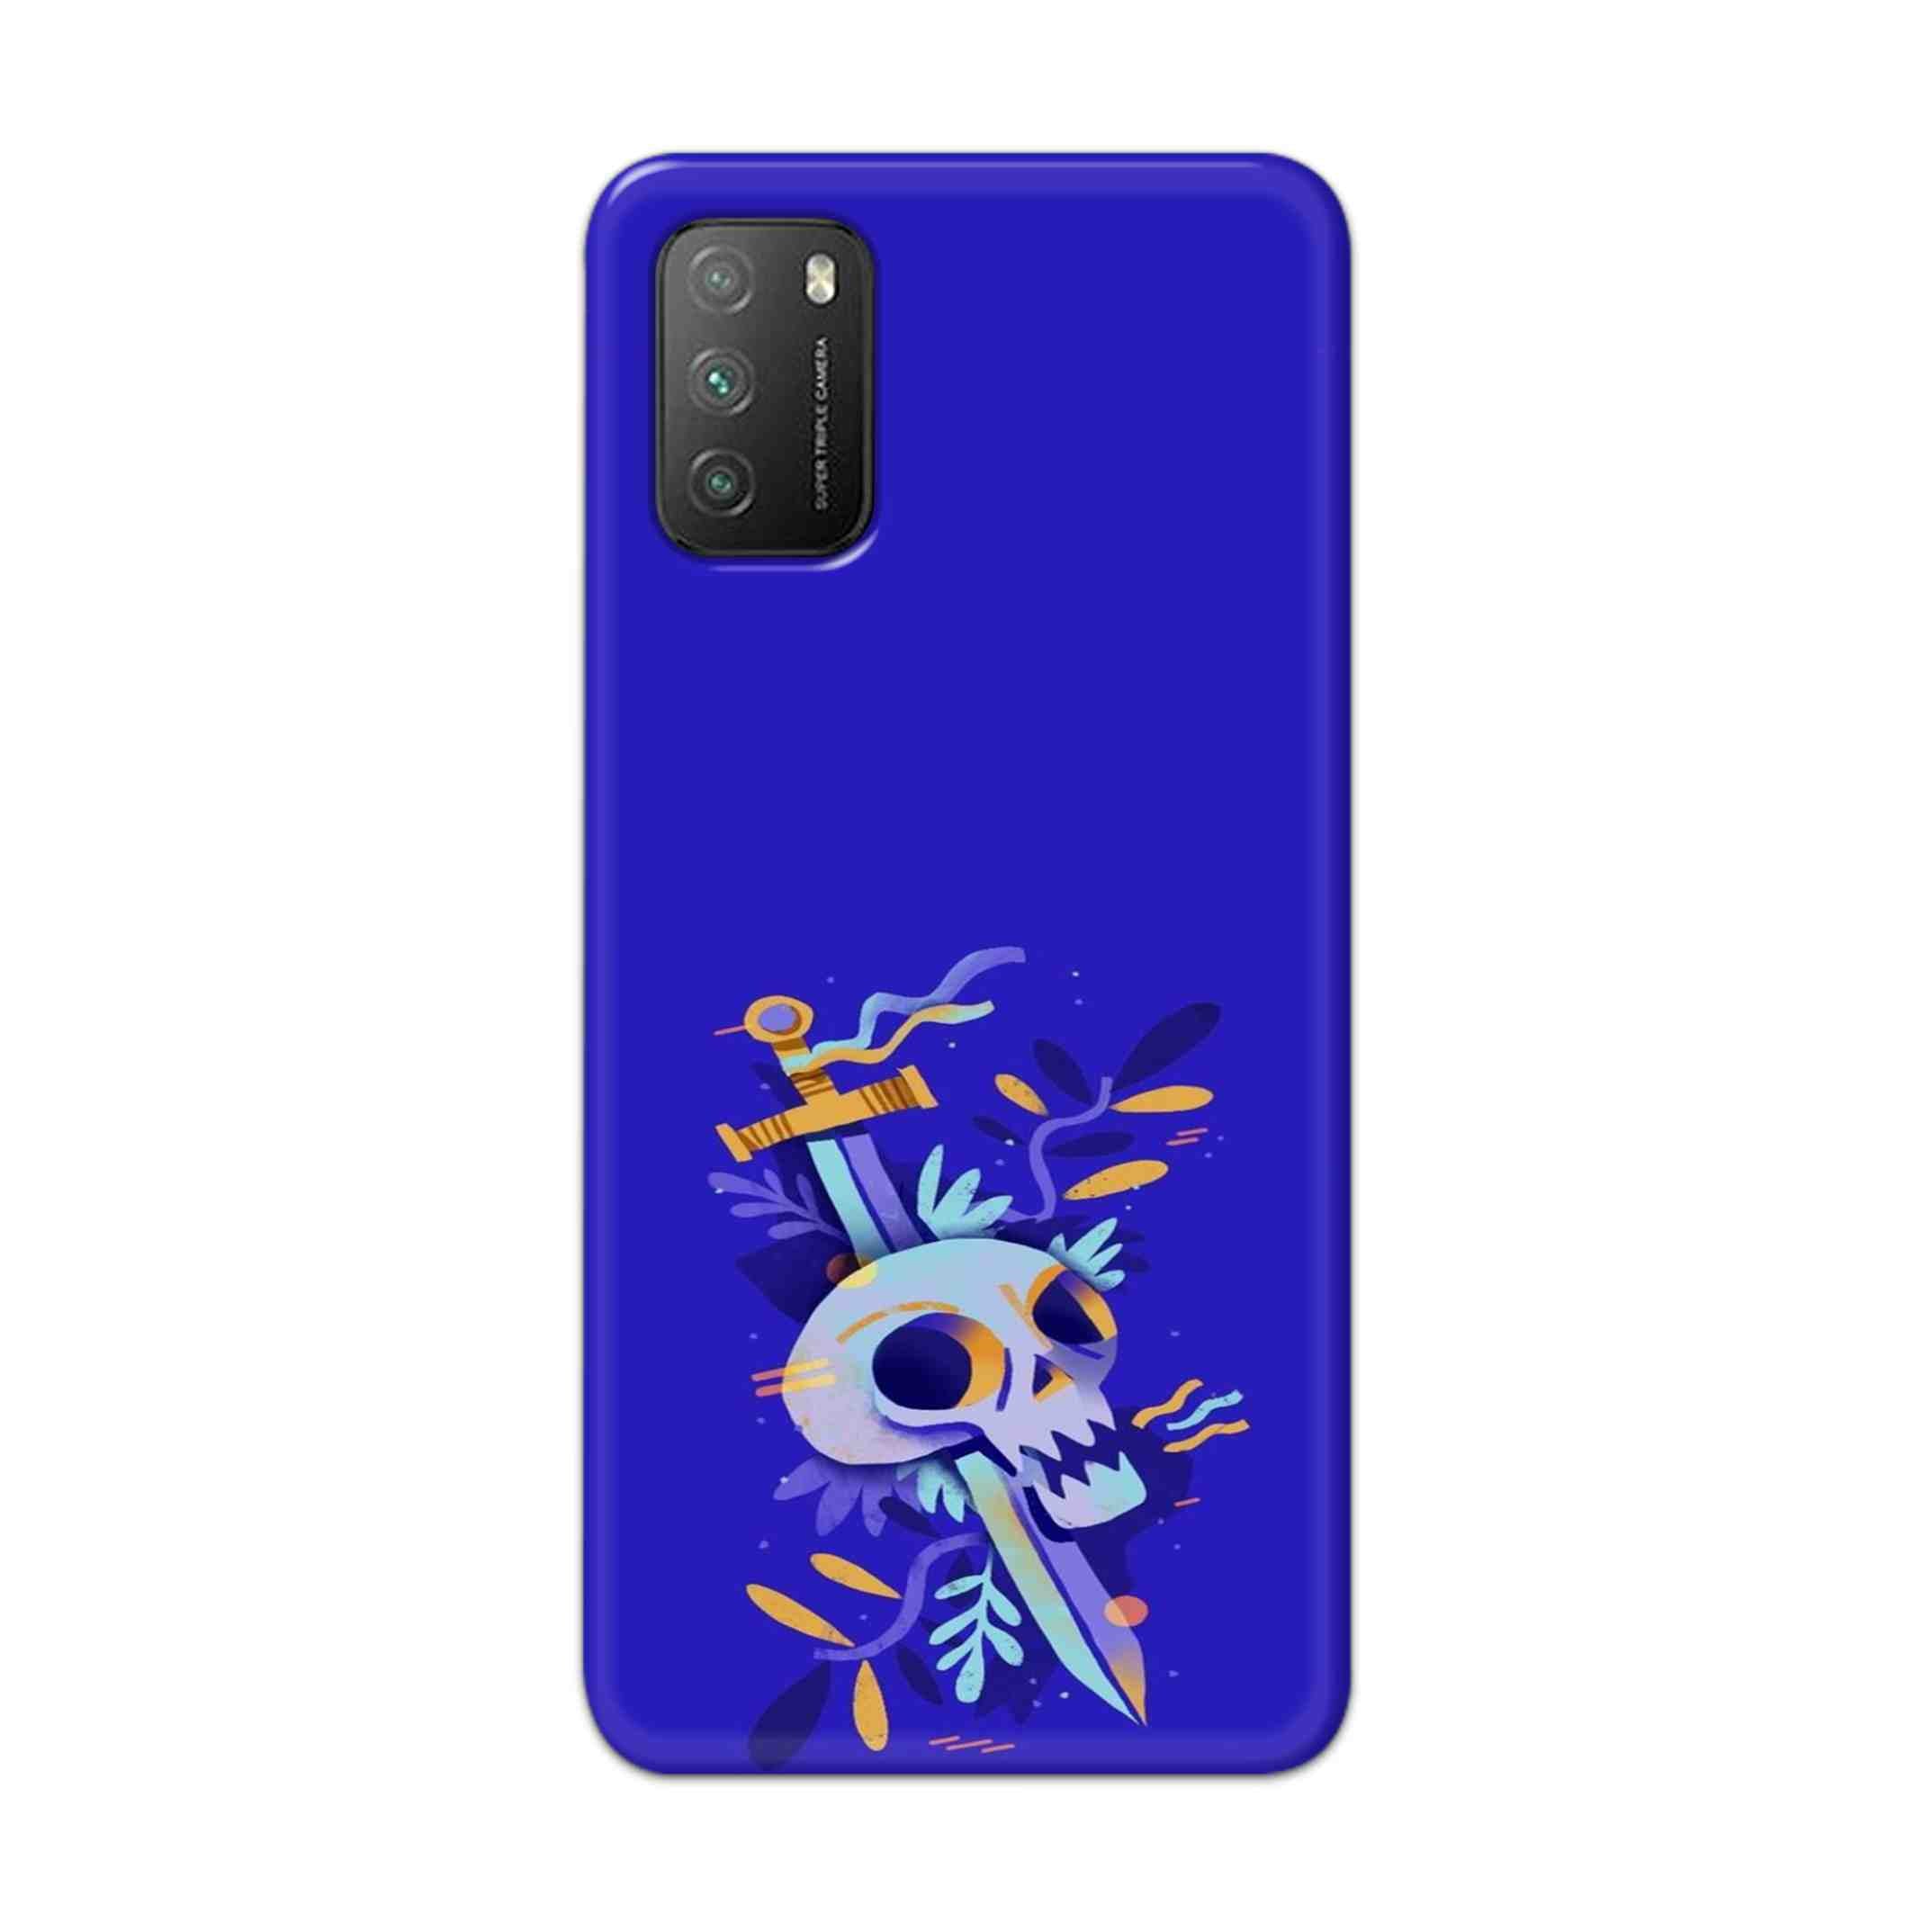 Buy Blue Skull Hard Back Mobile Phone Case Cover For Poco M3 Online